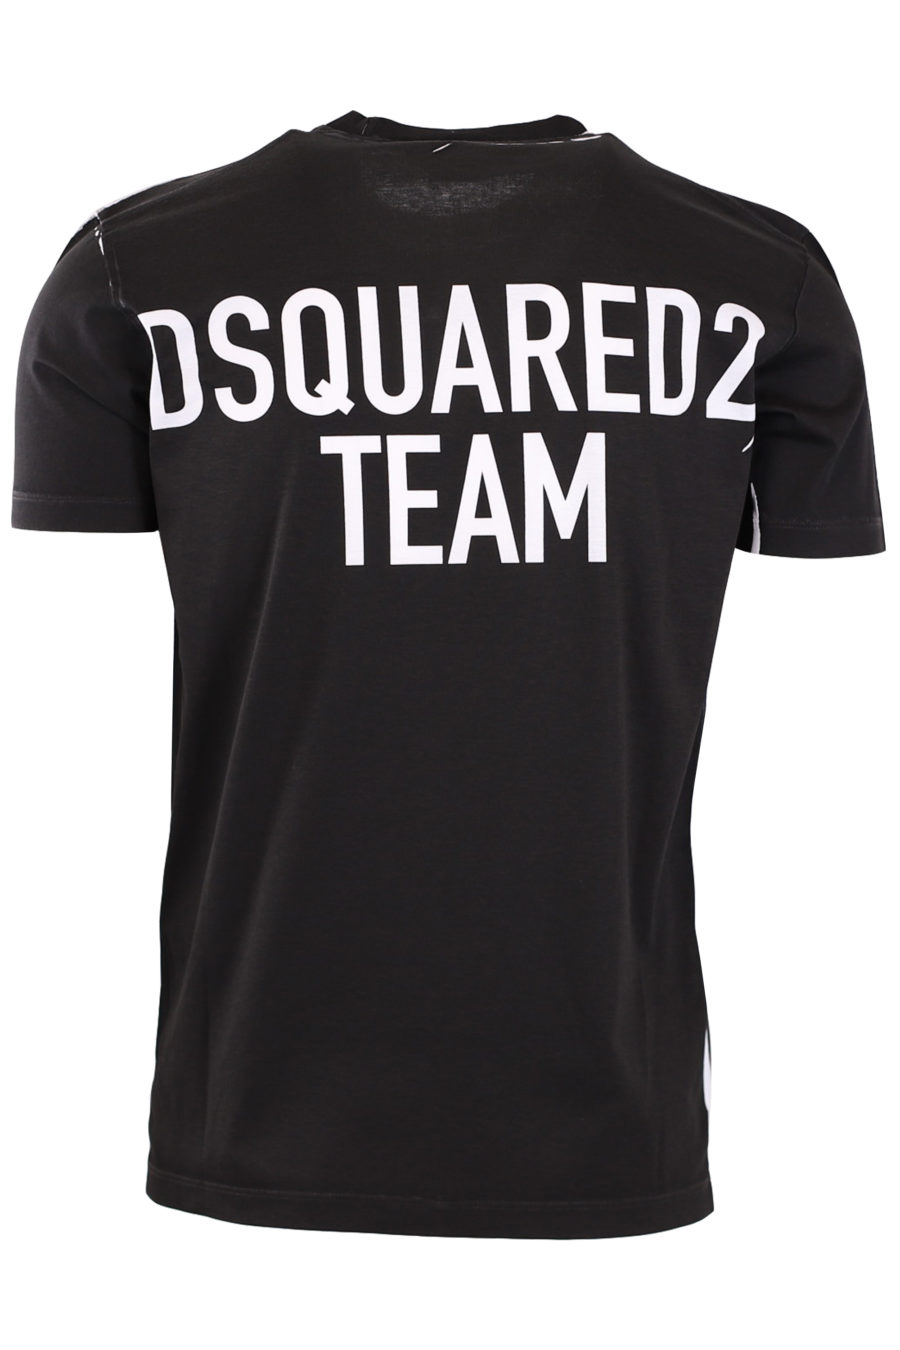 Black T-shirt with writing "Dsquared2 team" - 670bfdb17c0110044e1b27e967f45fcb45c5306f